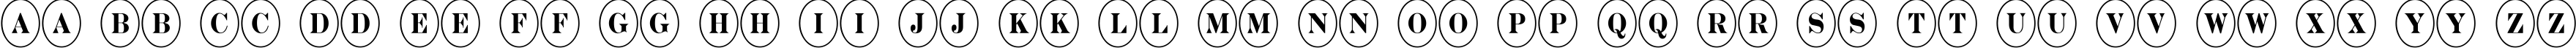 Пример написания английского алфавита шрифтом a_DiscoSerifNr